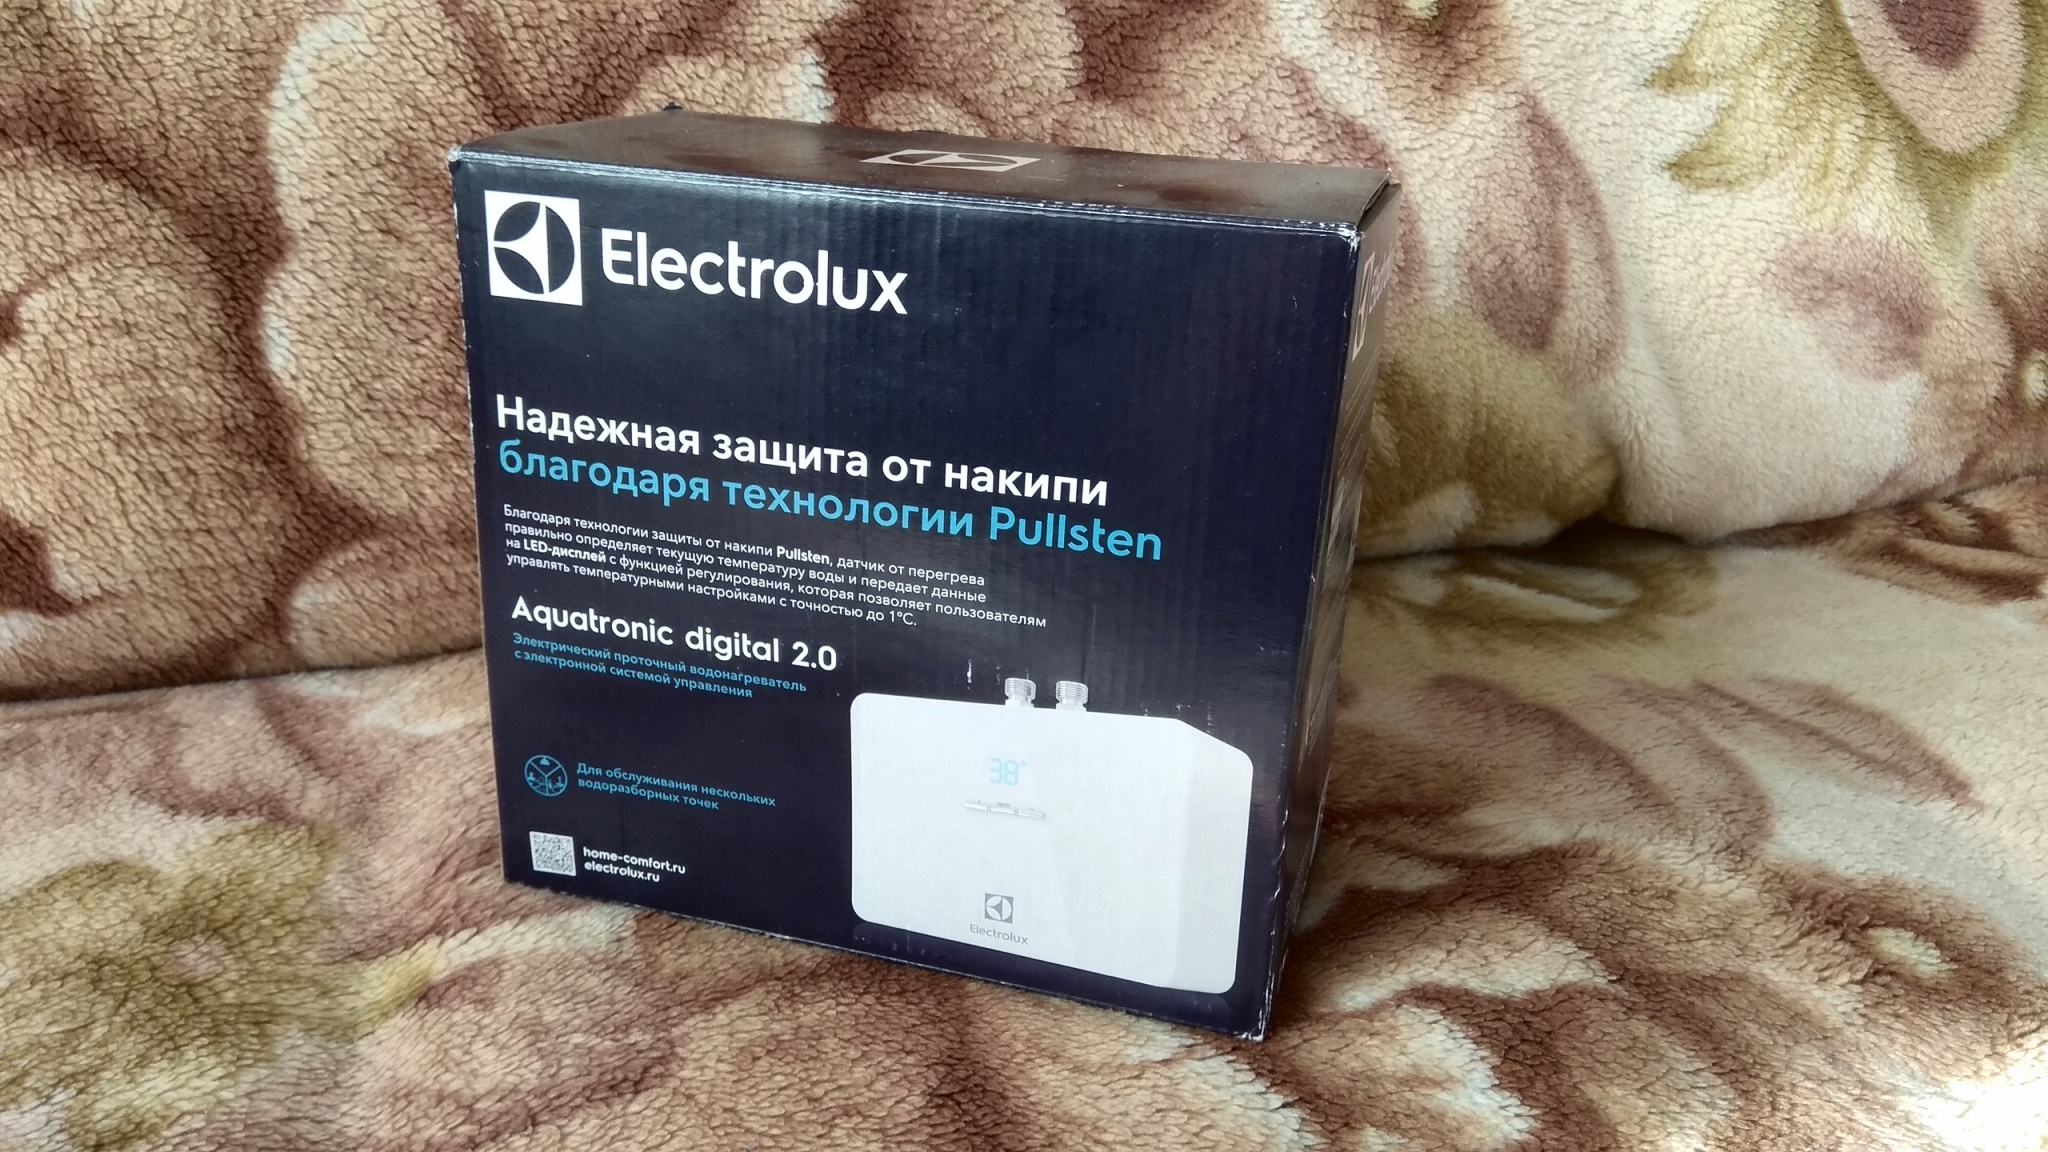 Electrolux aquatronic npx 6 digital